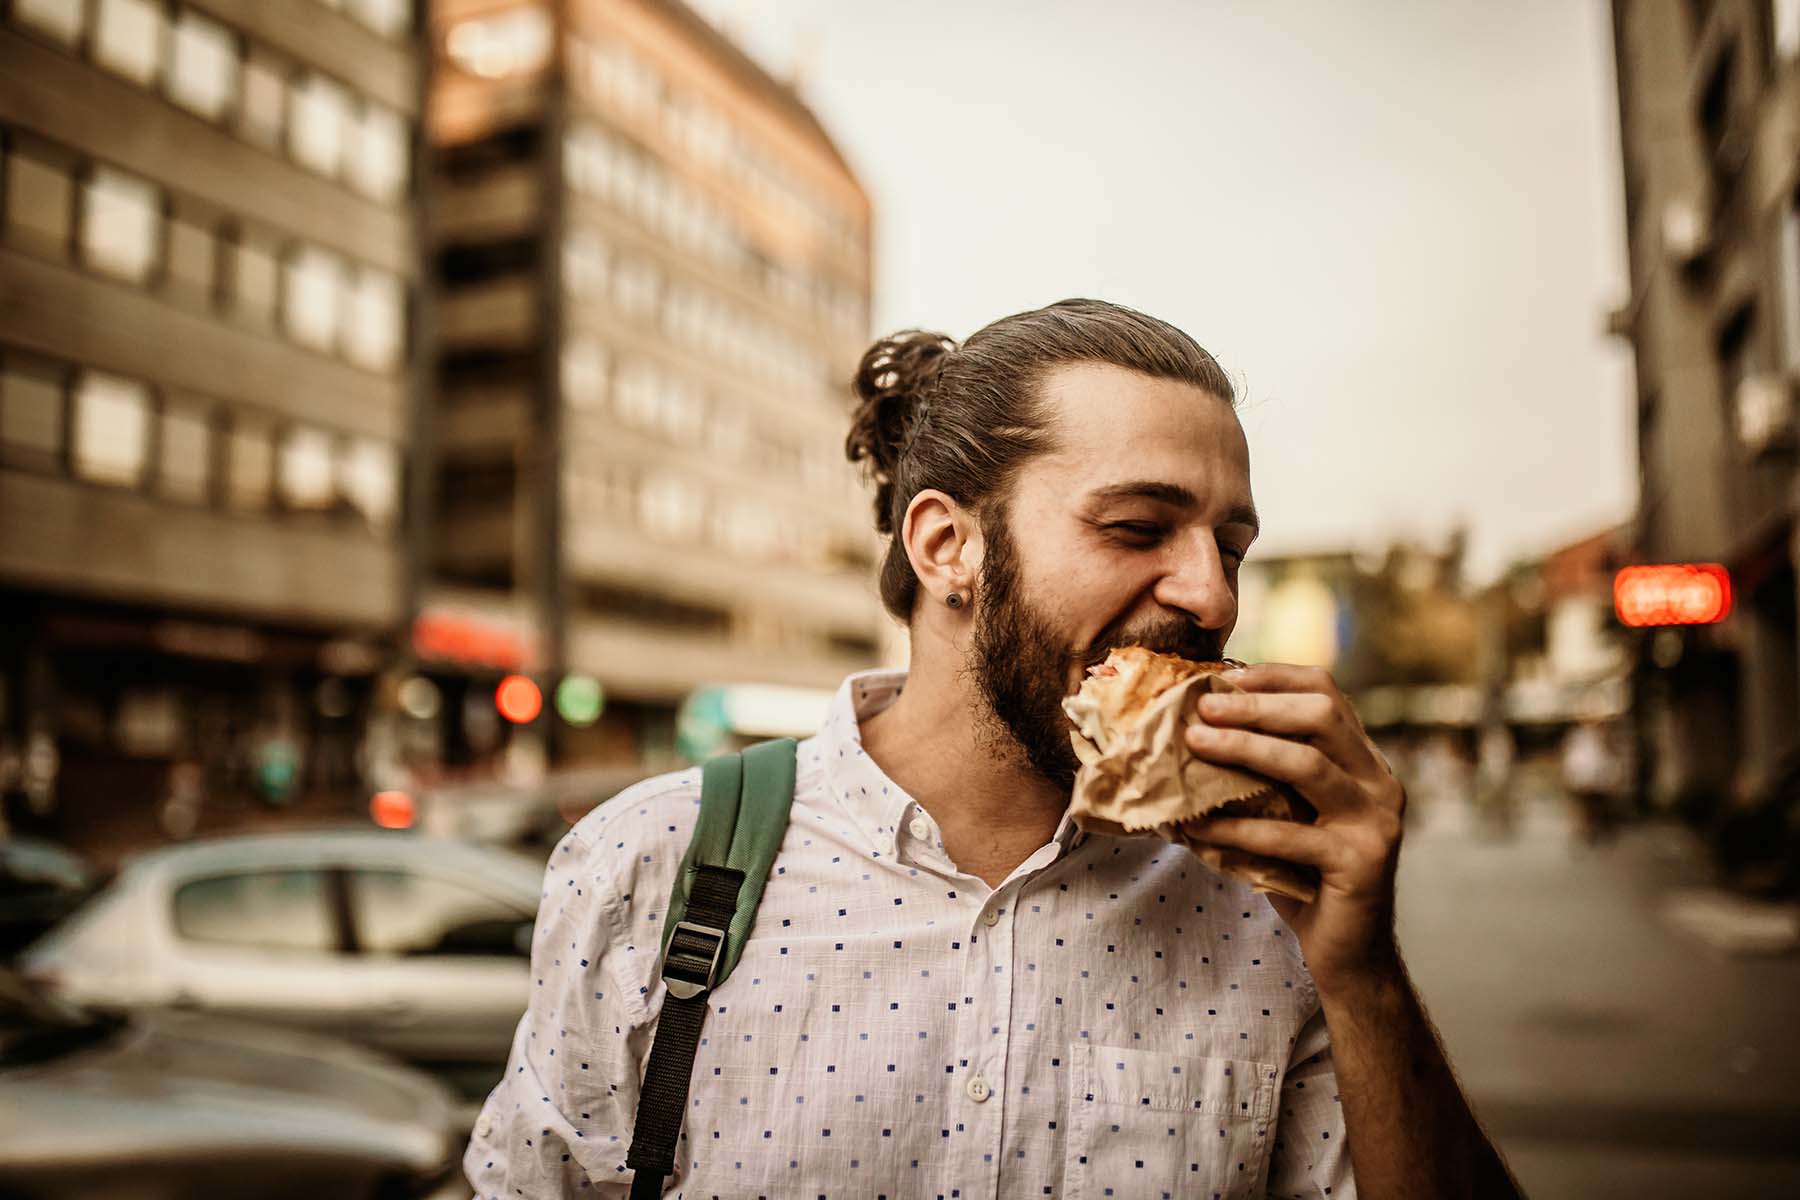 Man enjoys vendor yummy, mouth-watering sandwich while walking down street.